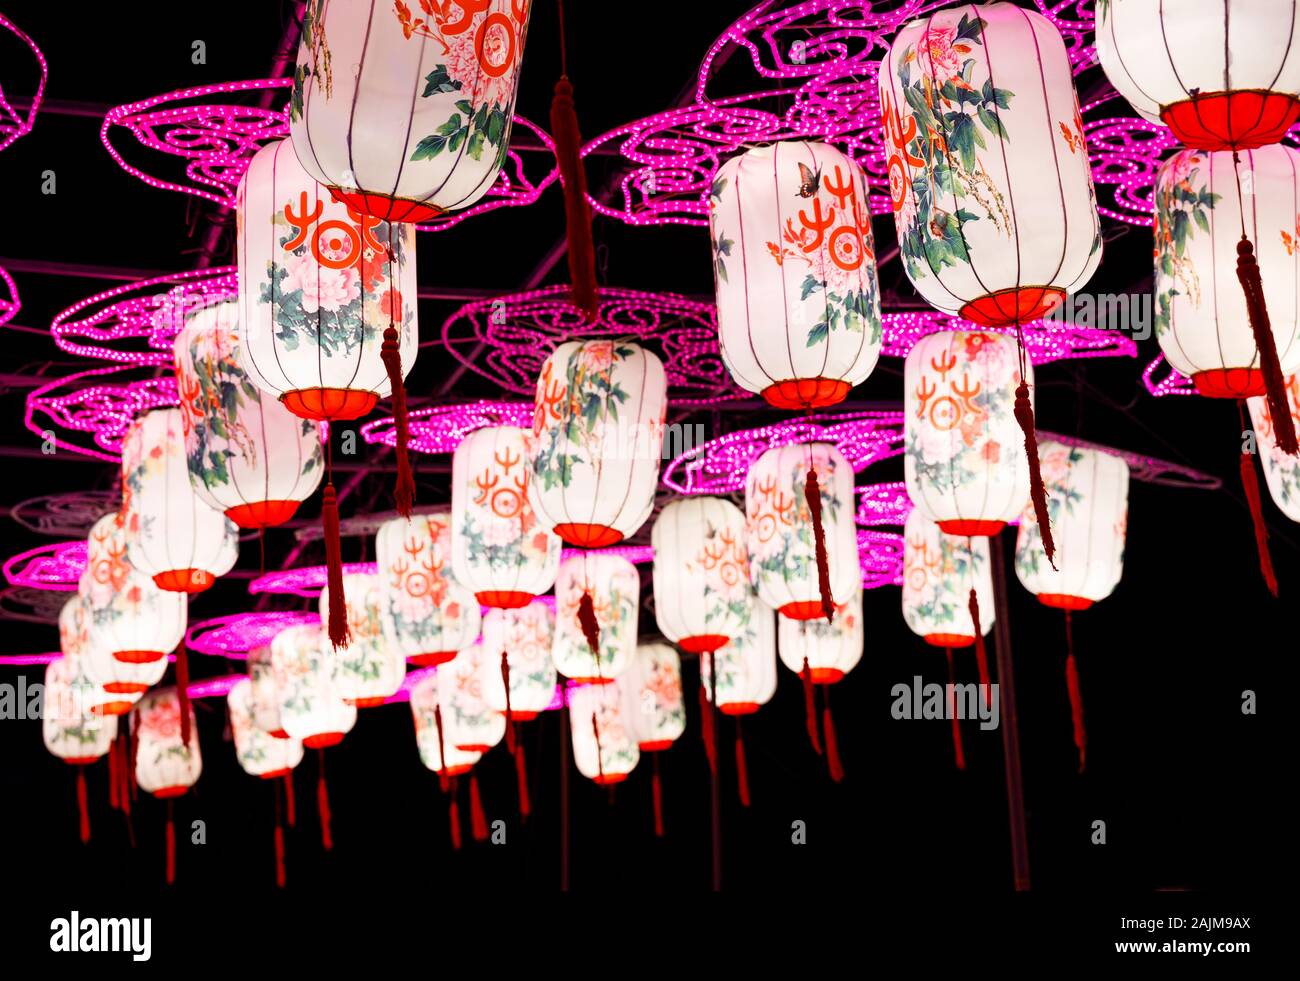 Illuminated paper made China new year lanterns Stock Photo